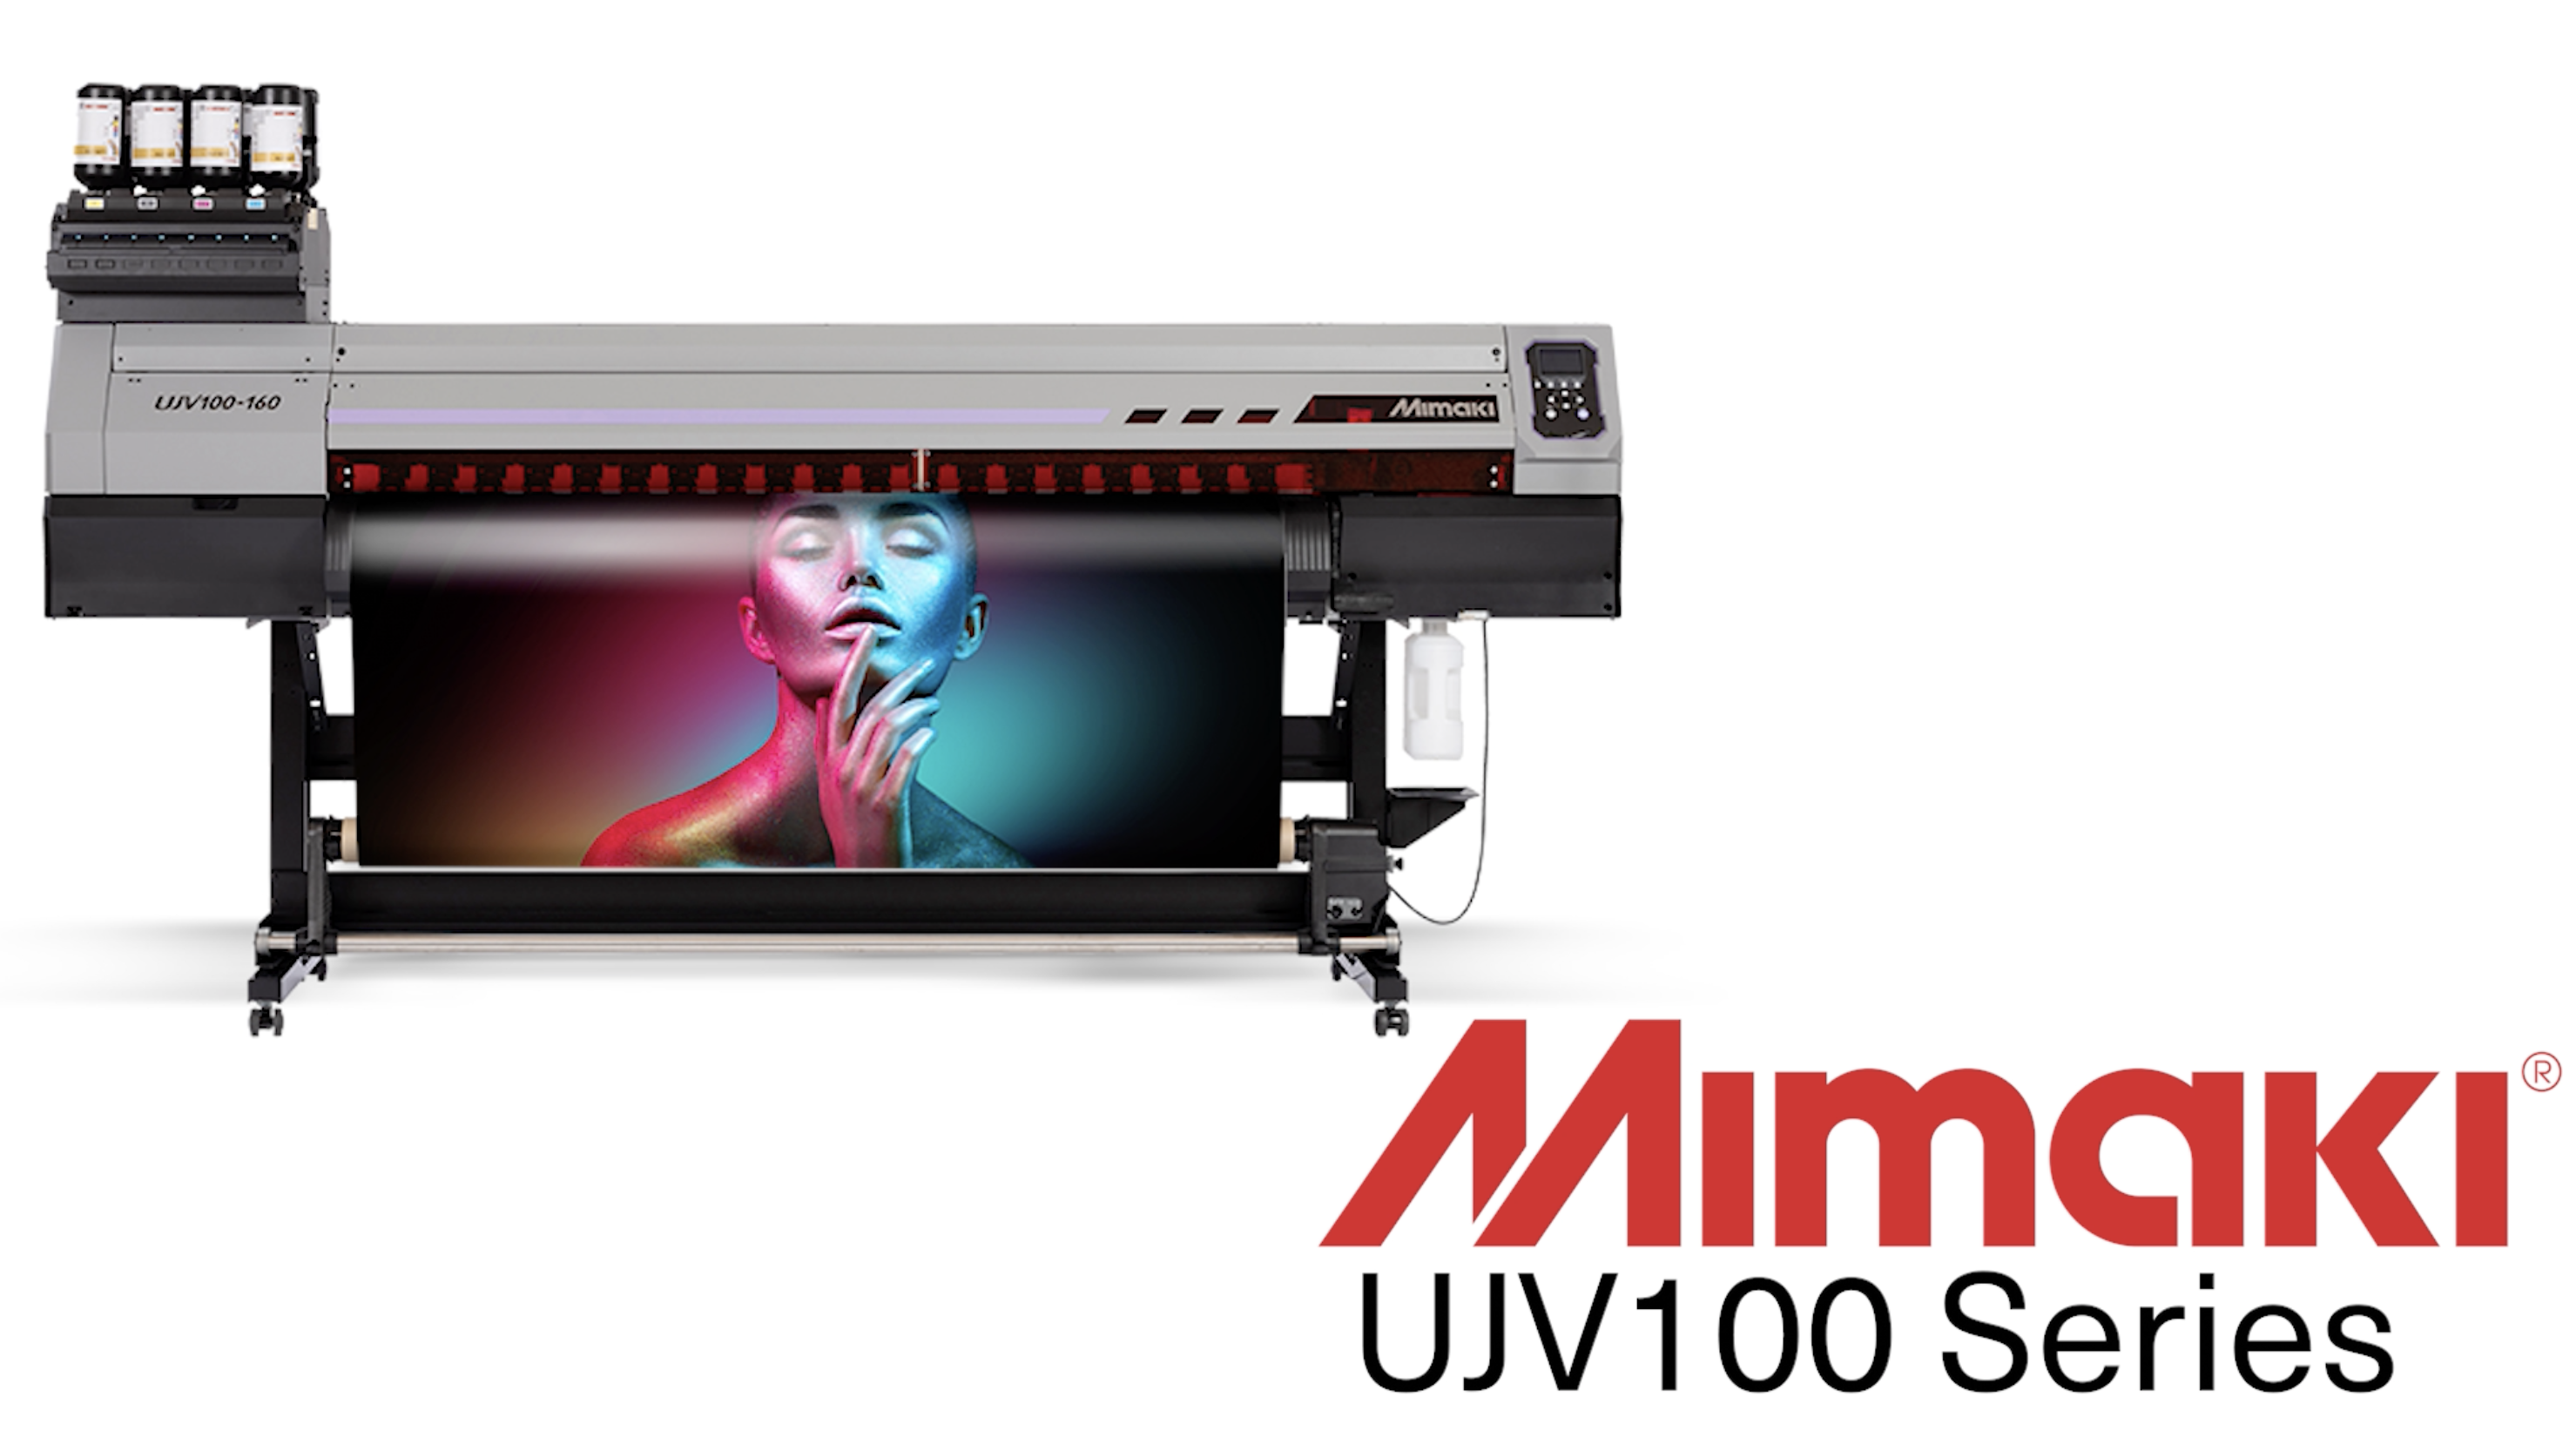 Mimaki UJV100-160 - Expert Printing Made Easy